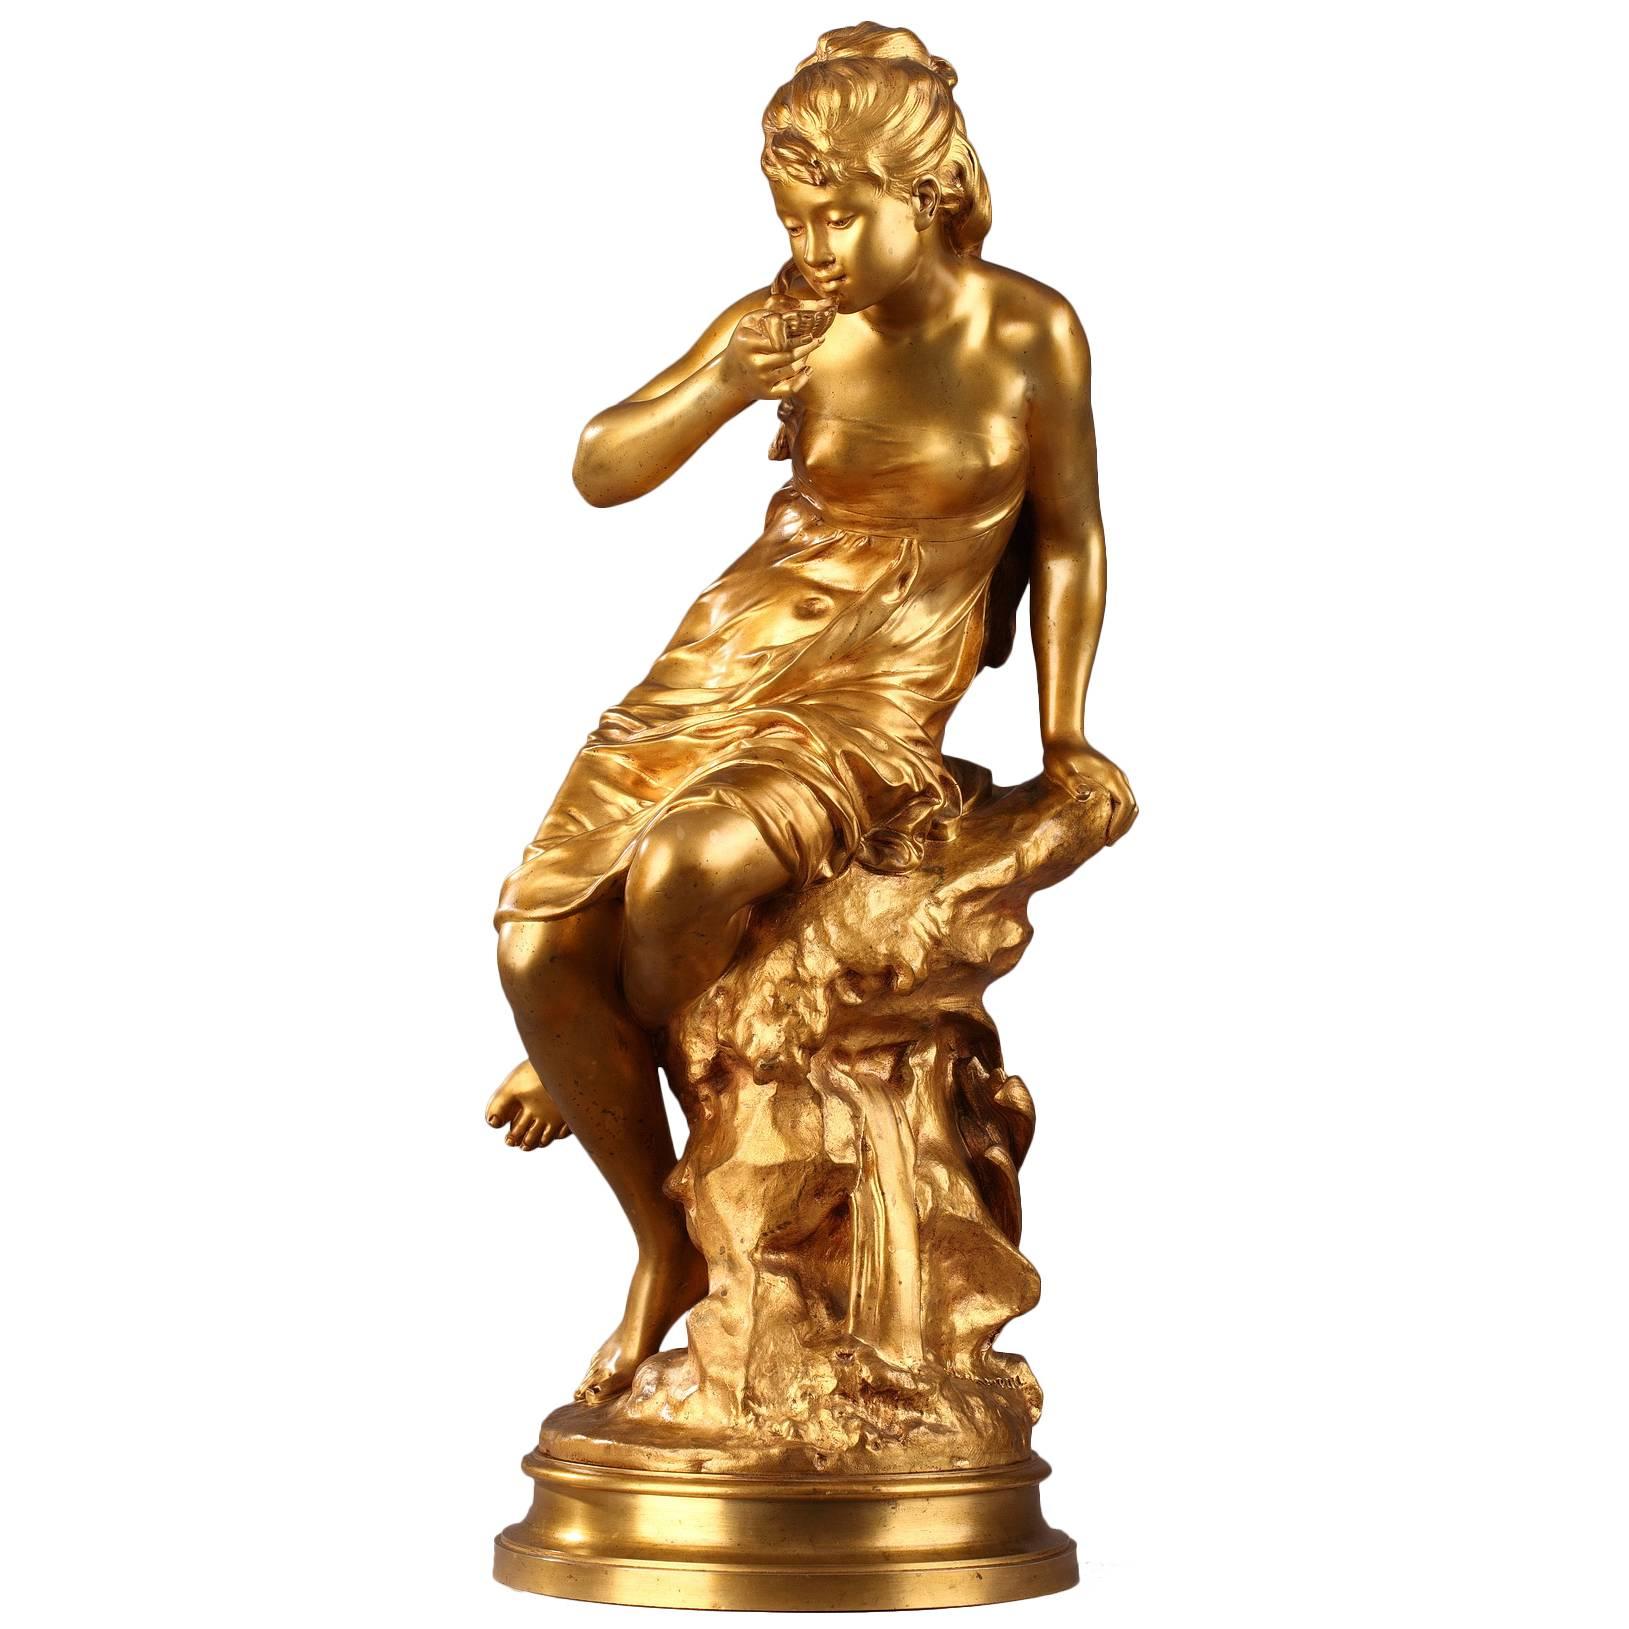 Bronze Statue “La Source” by Mathurin Moreau